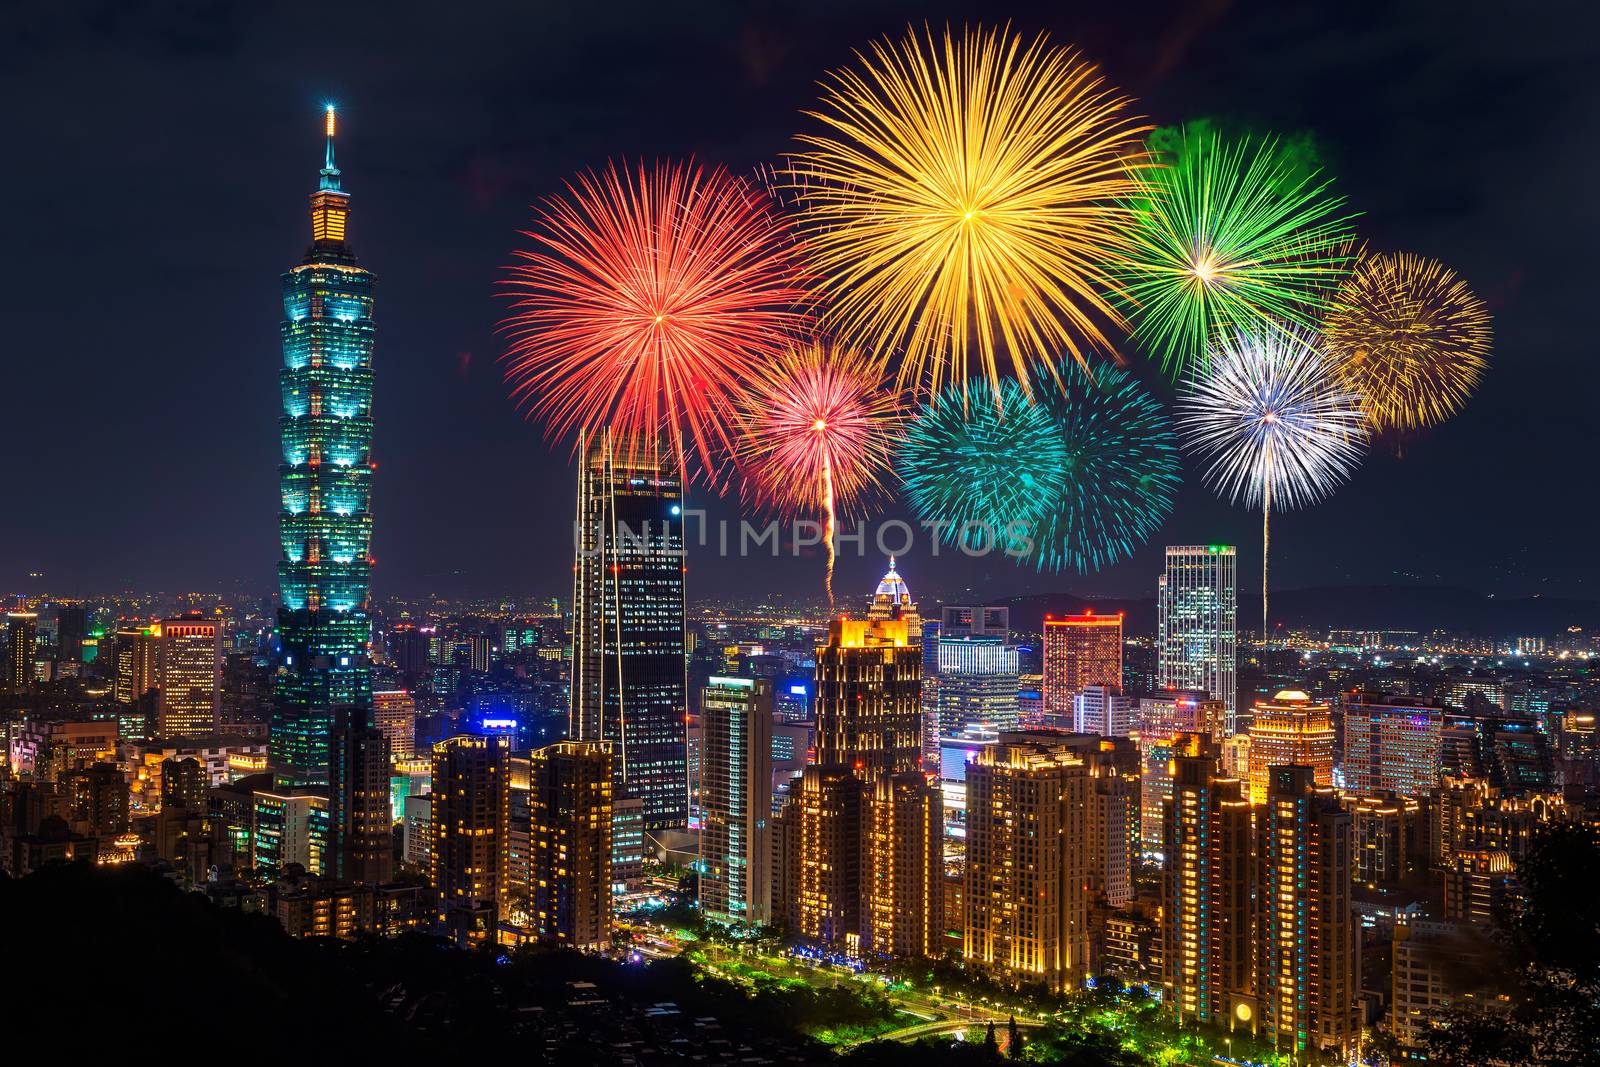 Fireworks festival at night in Taipei, Taiwan.